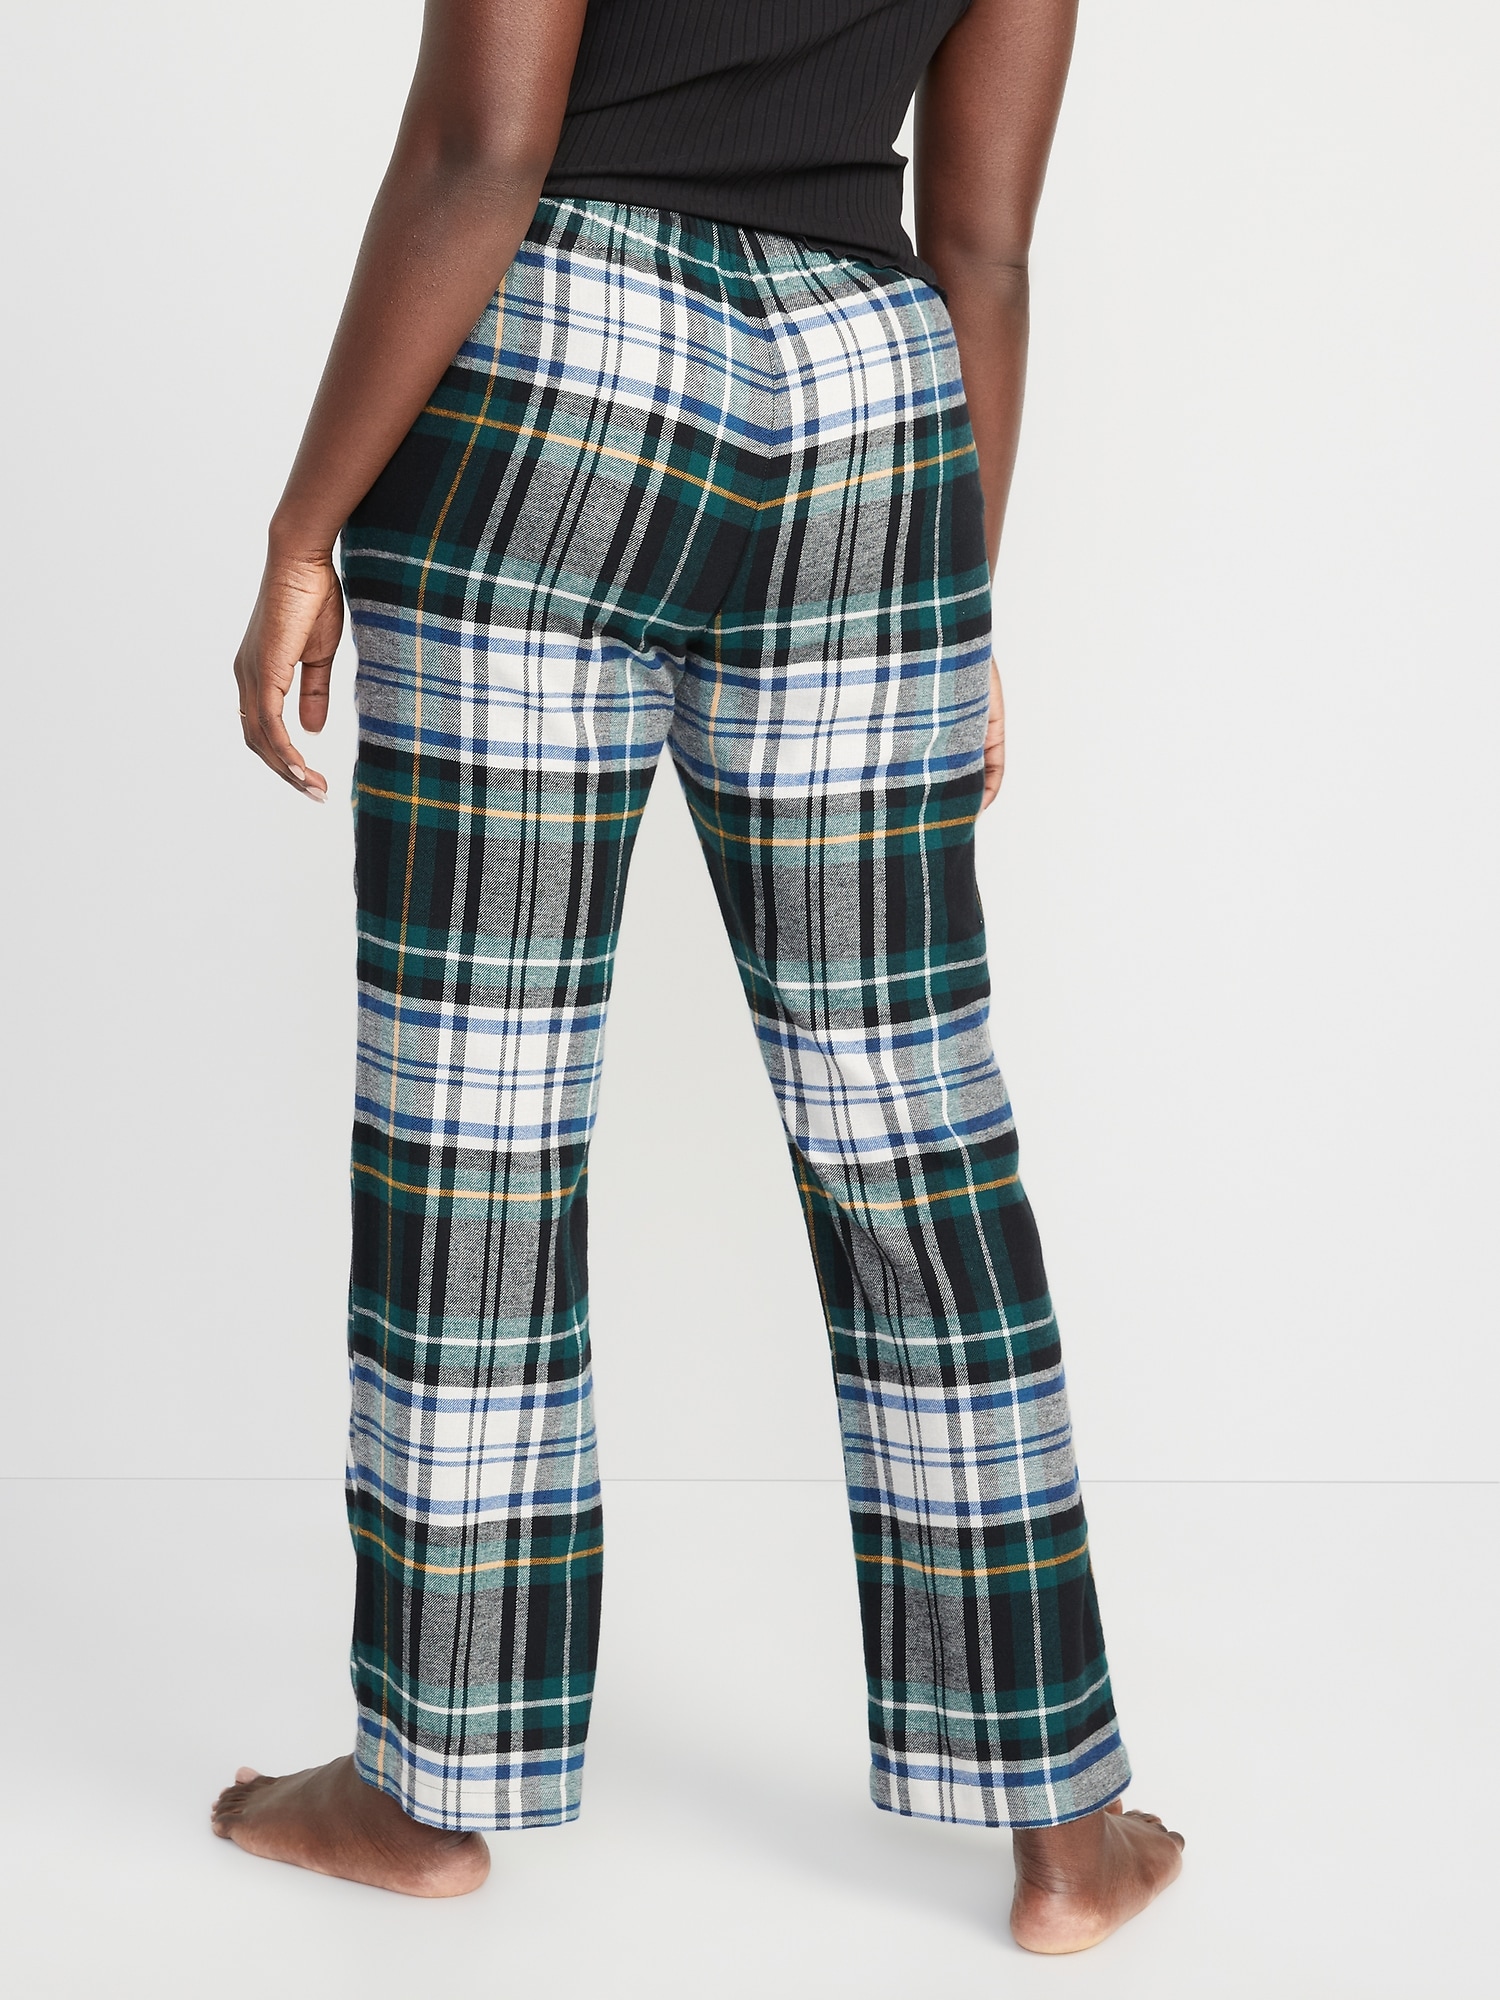 100% Cotton Lounge Pants & Shorts for Women | Nordstrom Rack